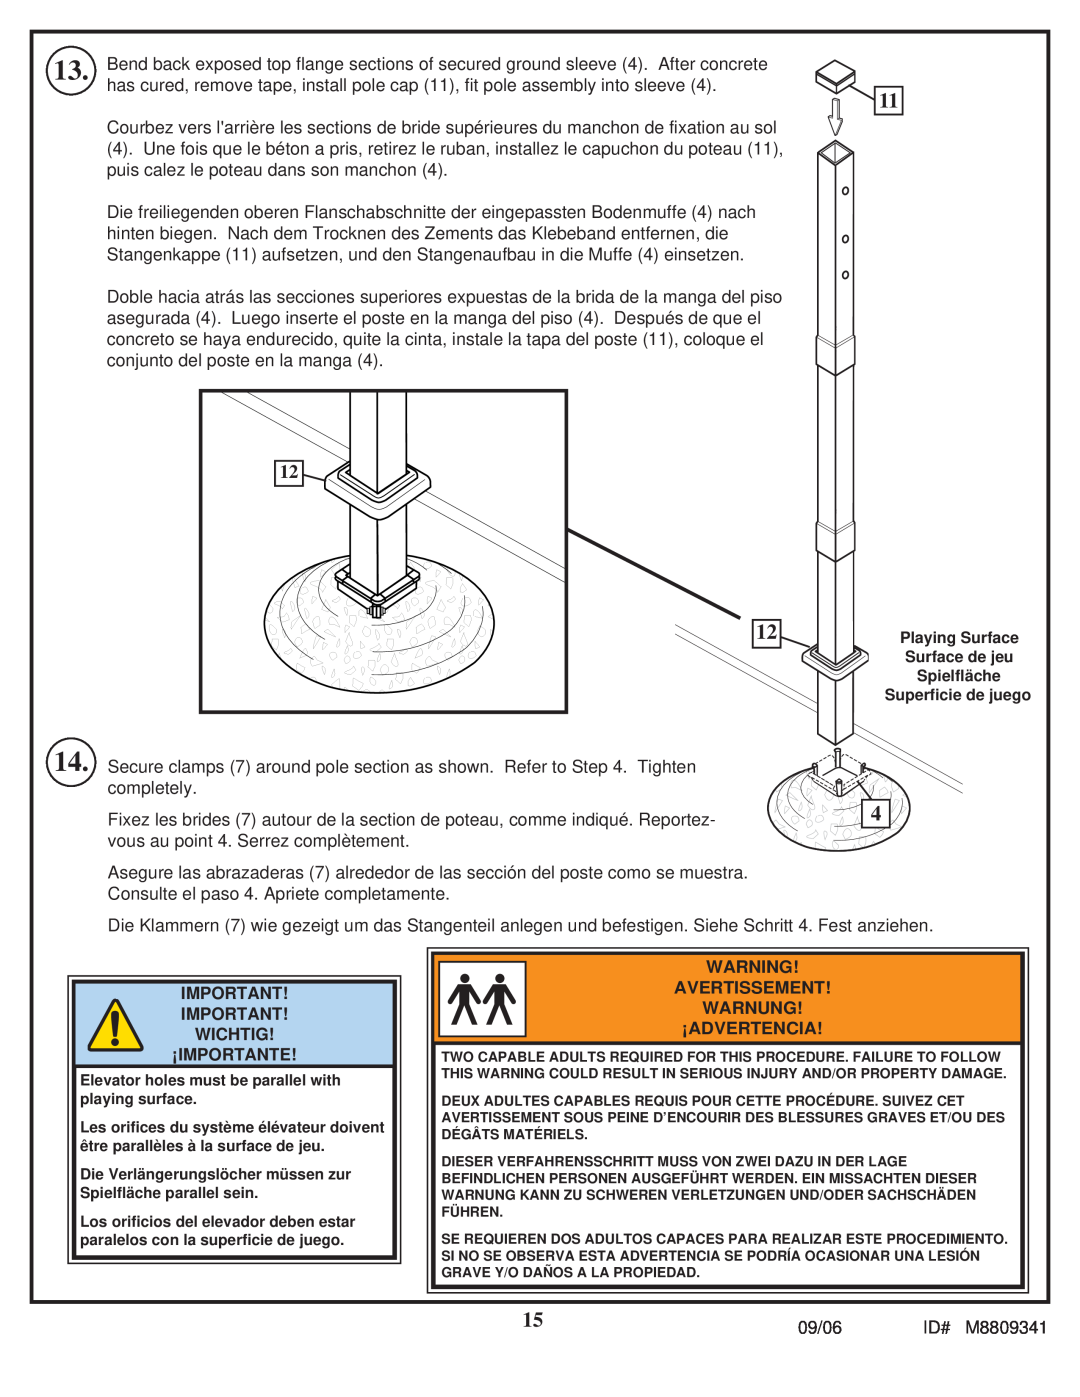 Spalding M8809341 manual Wichtig ¡Importante, Avertissement Warnung ¡Advertencia 